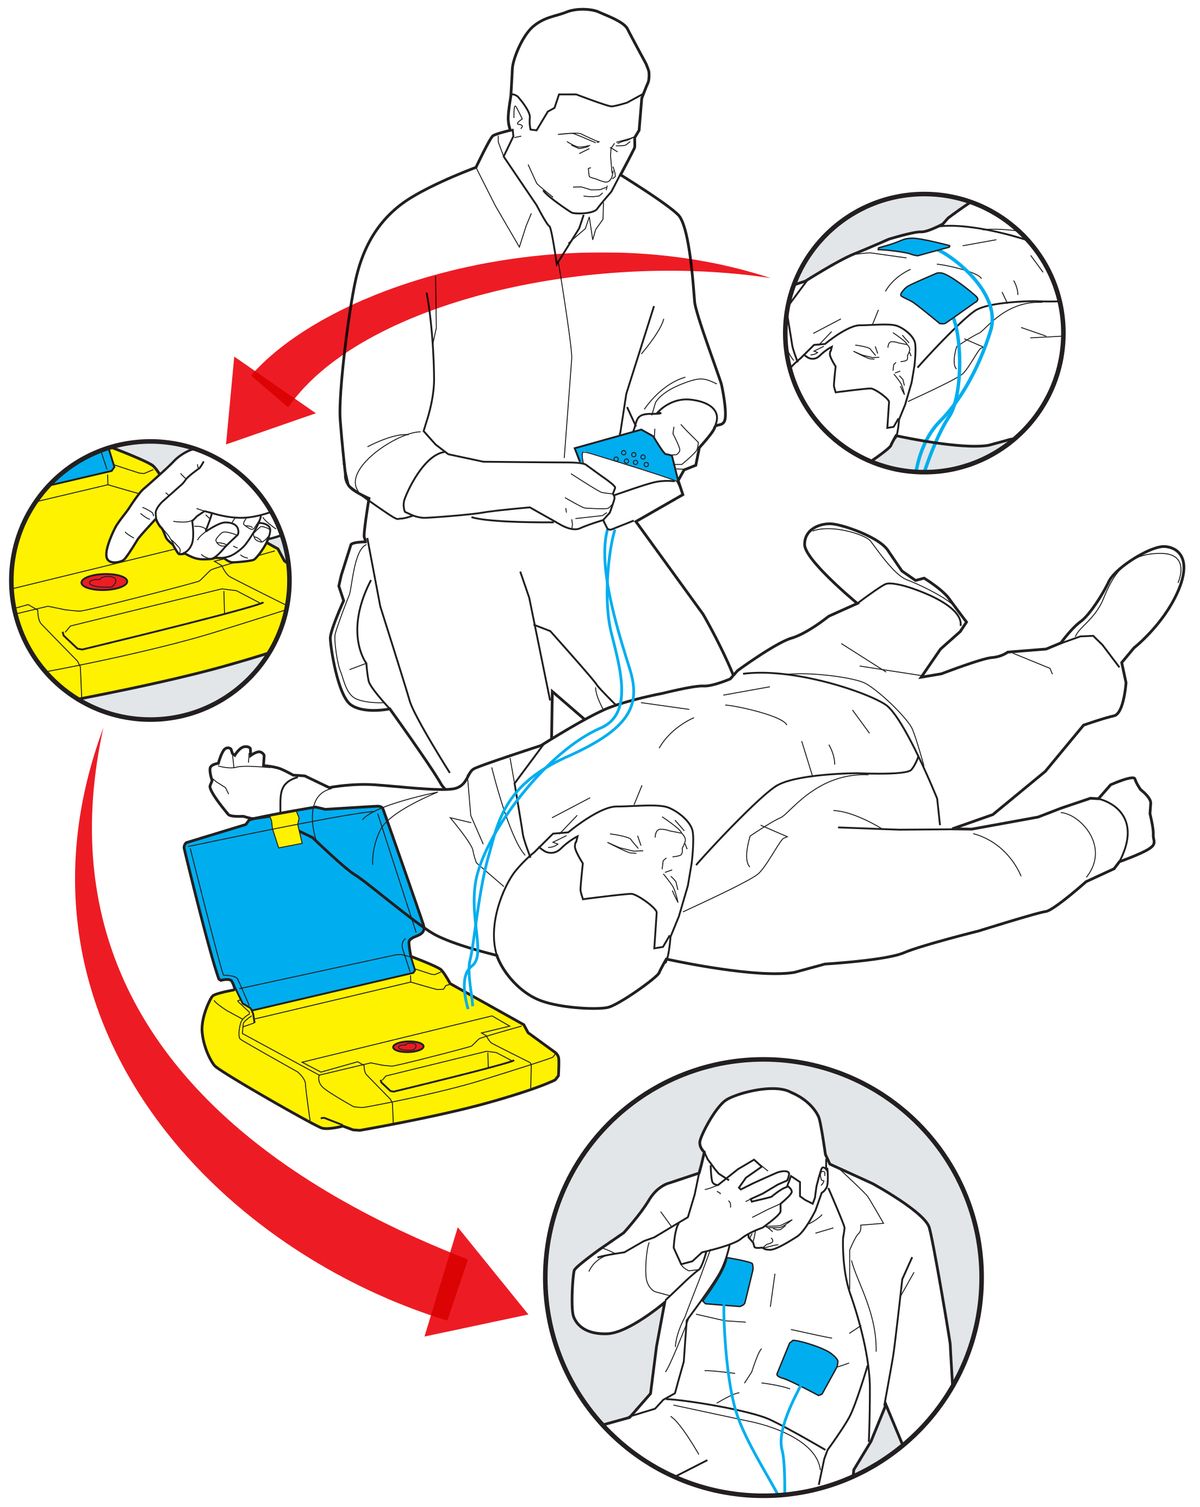 Illustration of defibrillator process